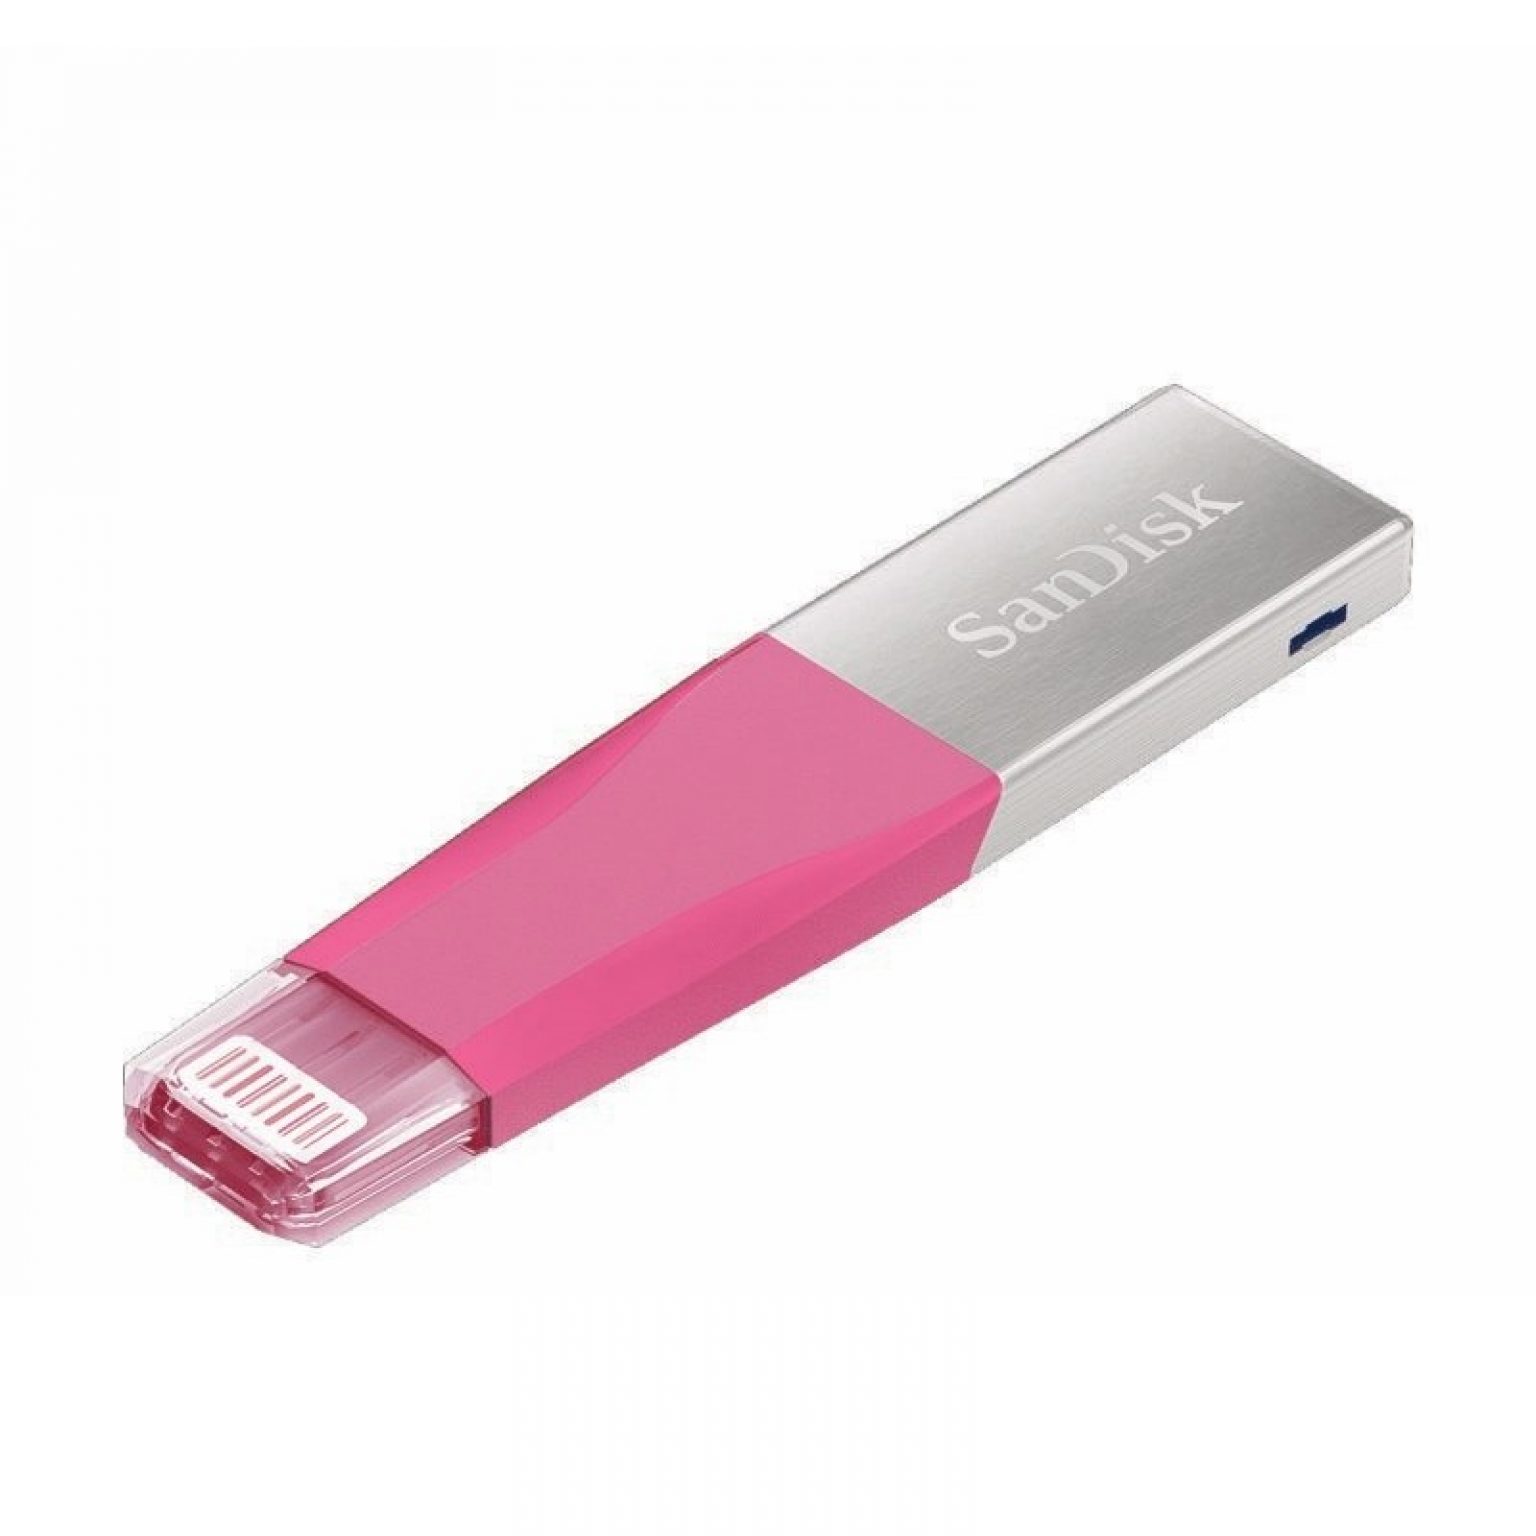 SANDISK - iXpand Mini flash drive 128GB, Pink [SDIX40N-128G-GN6NG]